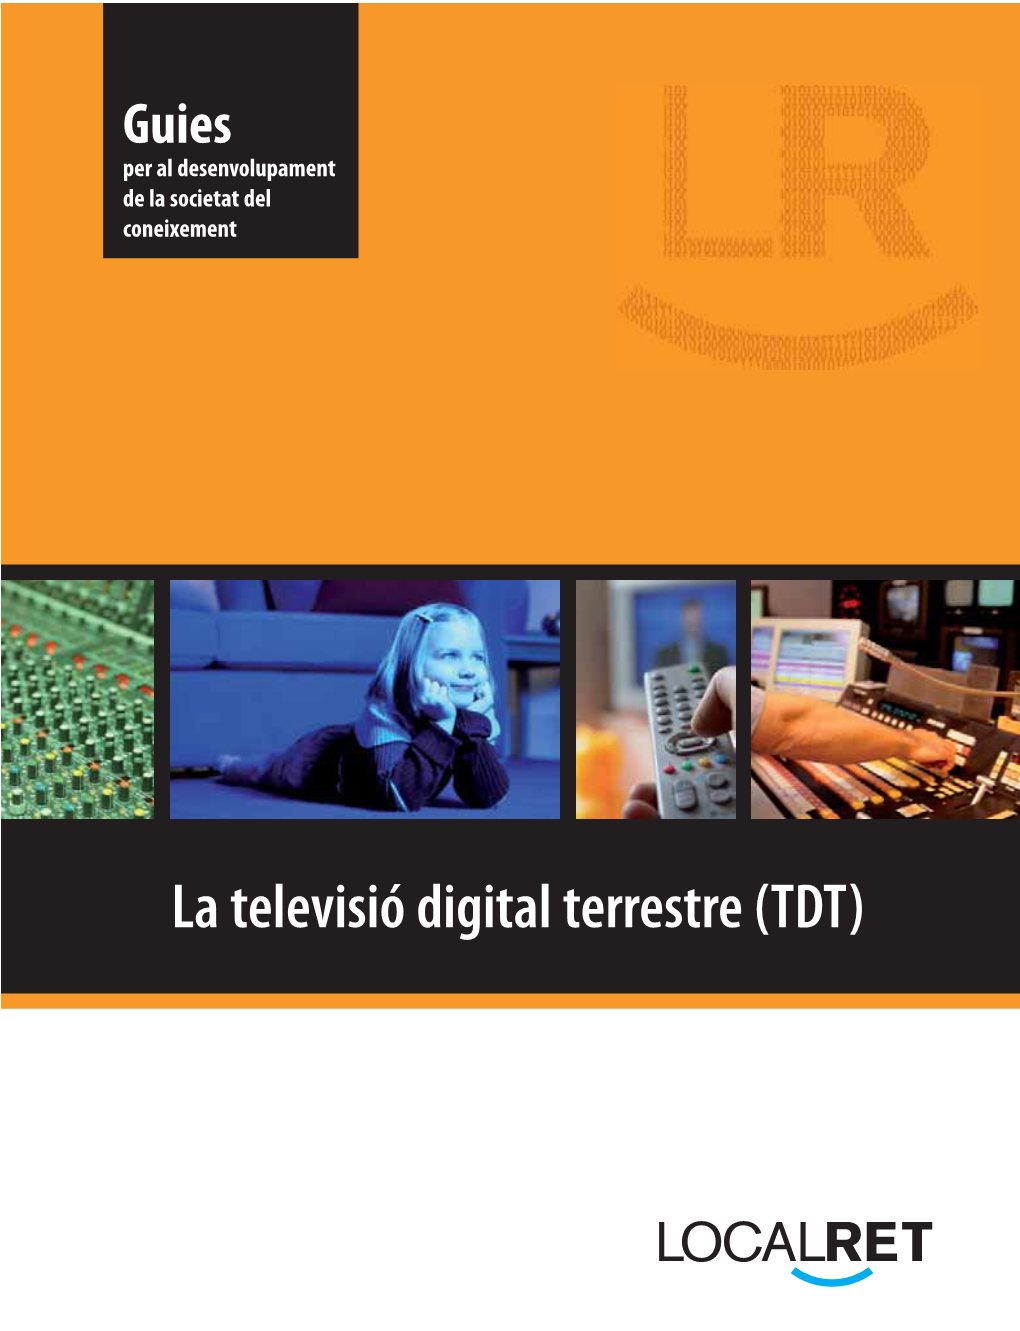 La Televisió Digital Terrestre (TDT) Guia Metodològica TDT 24/1/08 19:32 Página 1